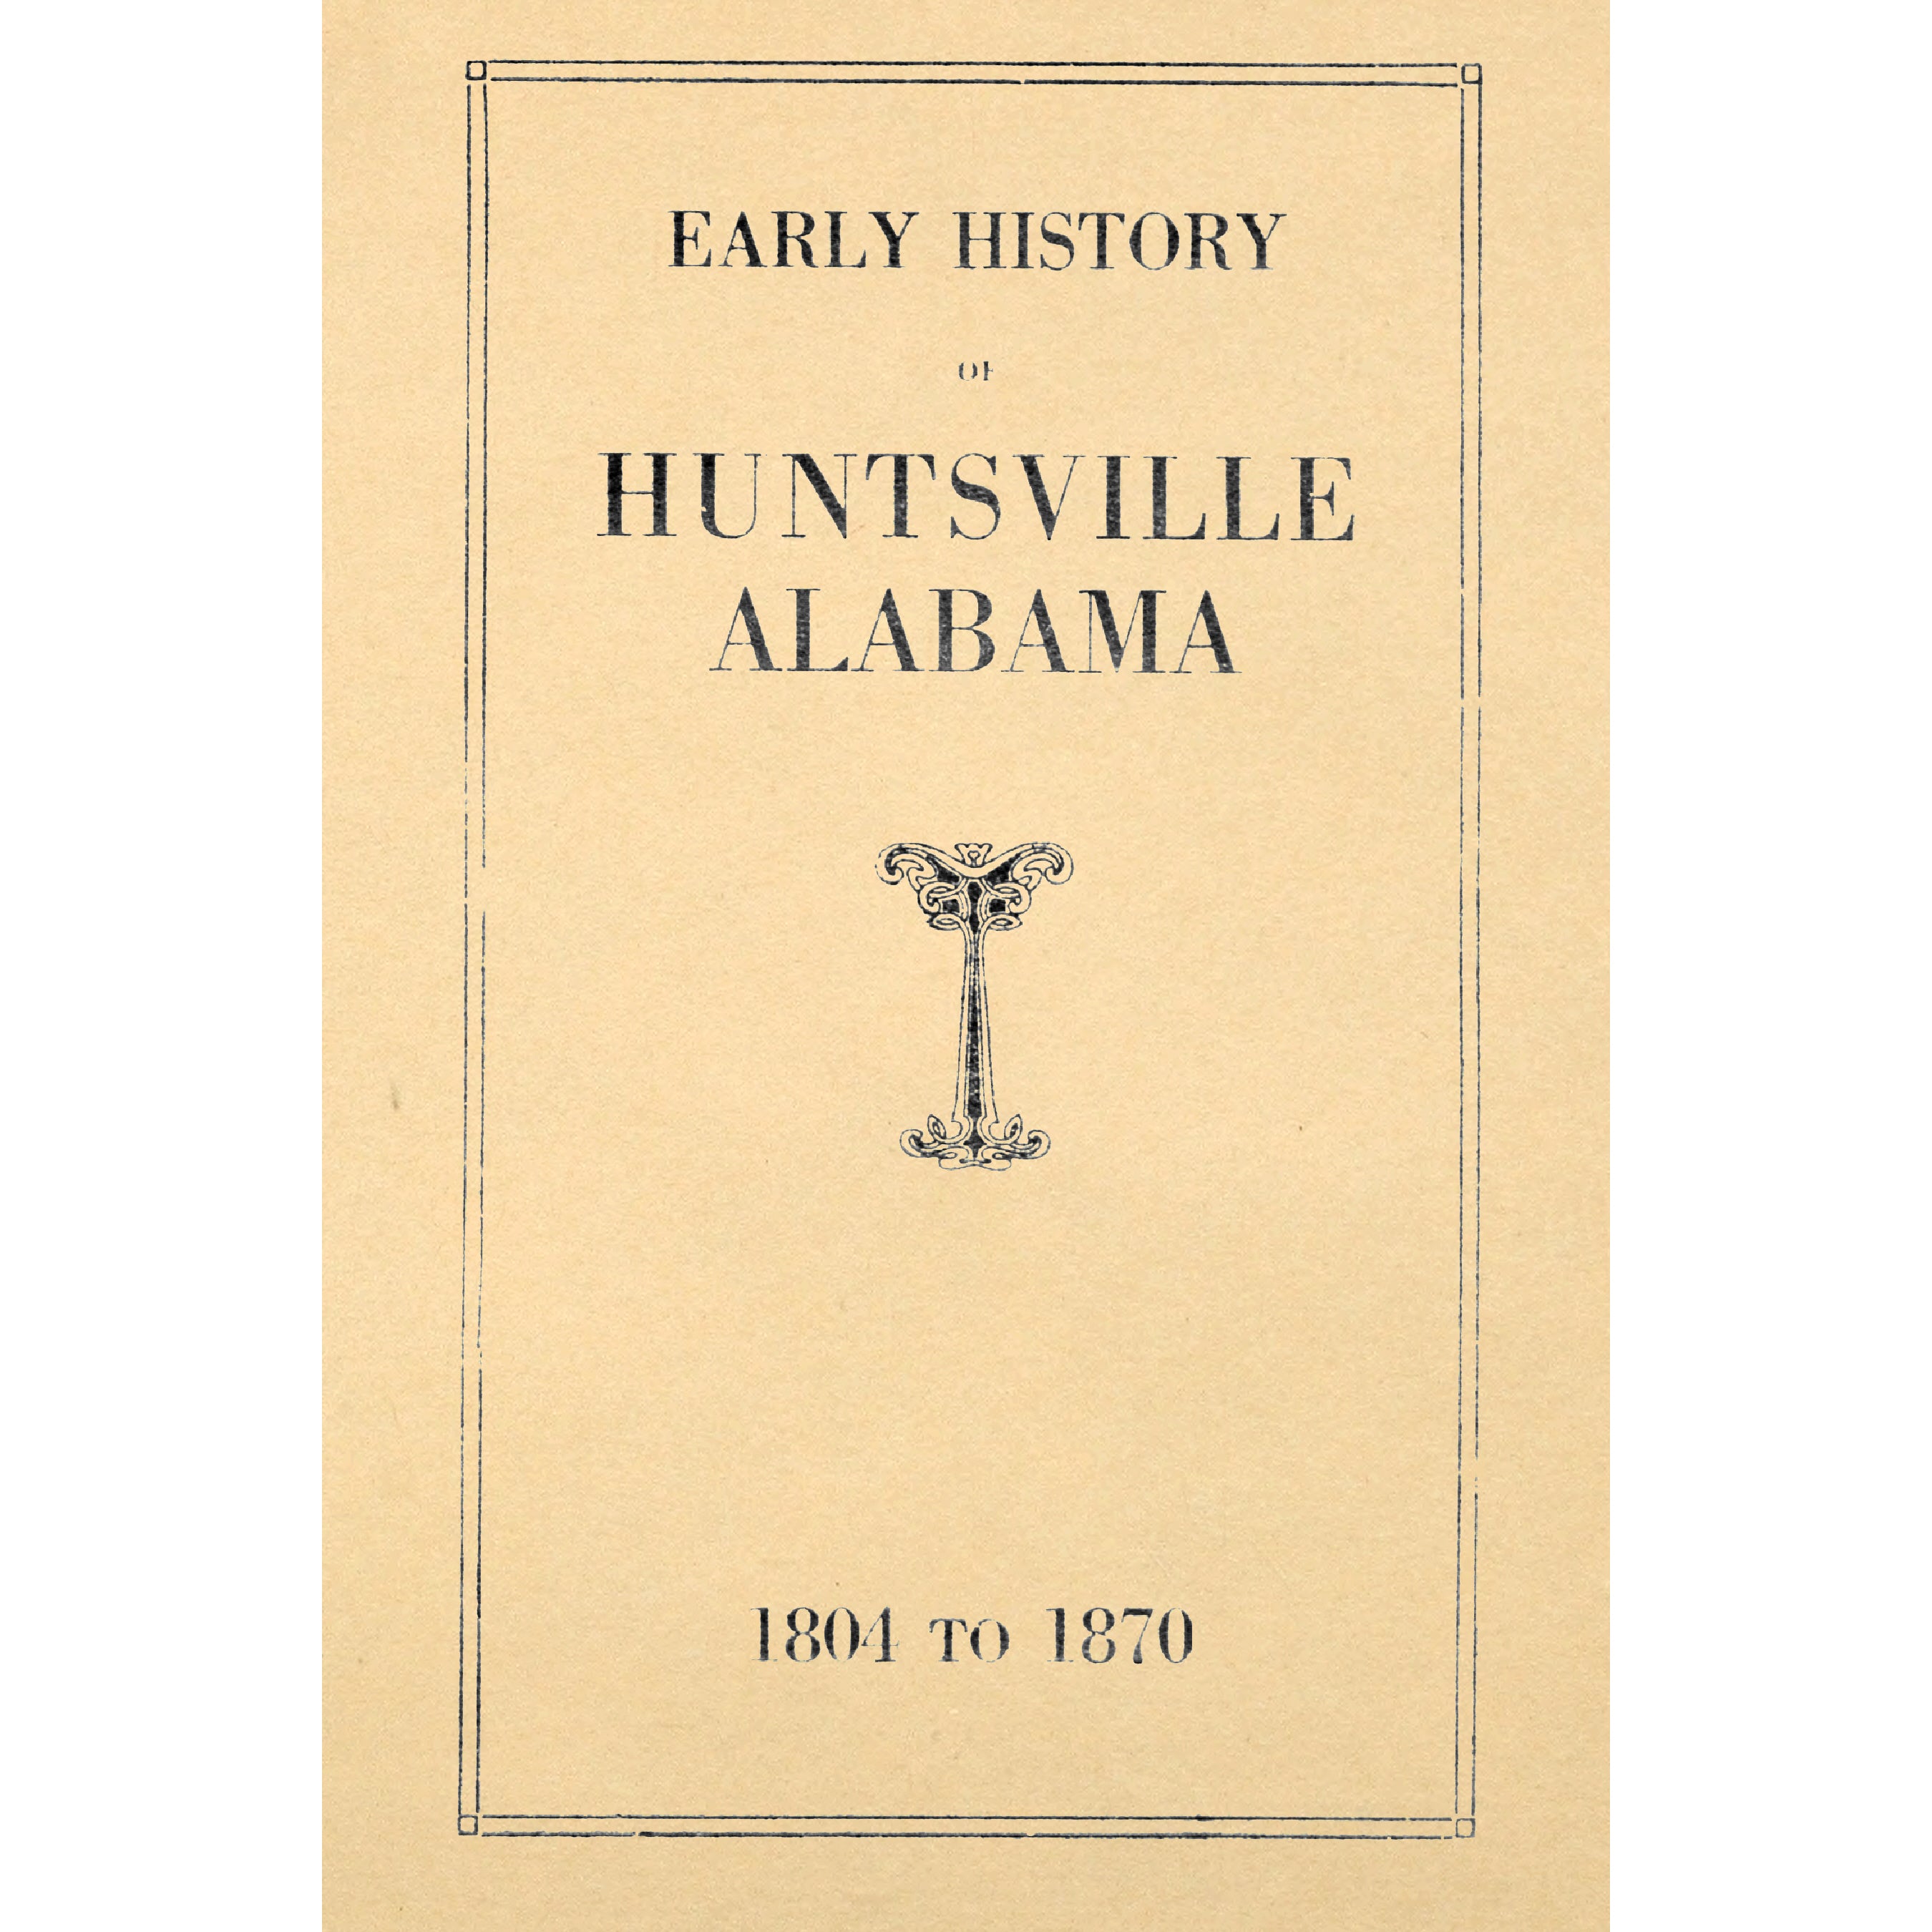 Early history of Huntsville, Alabama; 1804 to 1870.